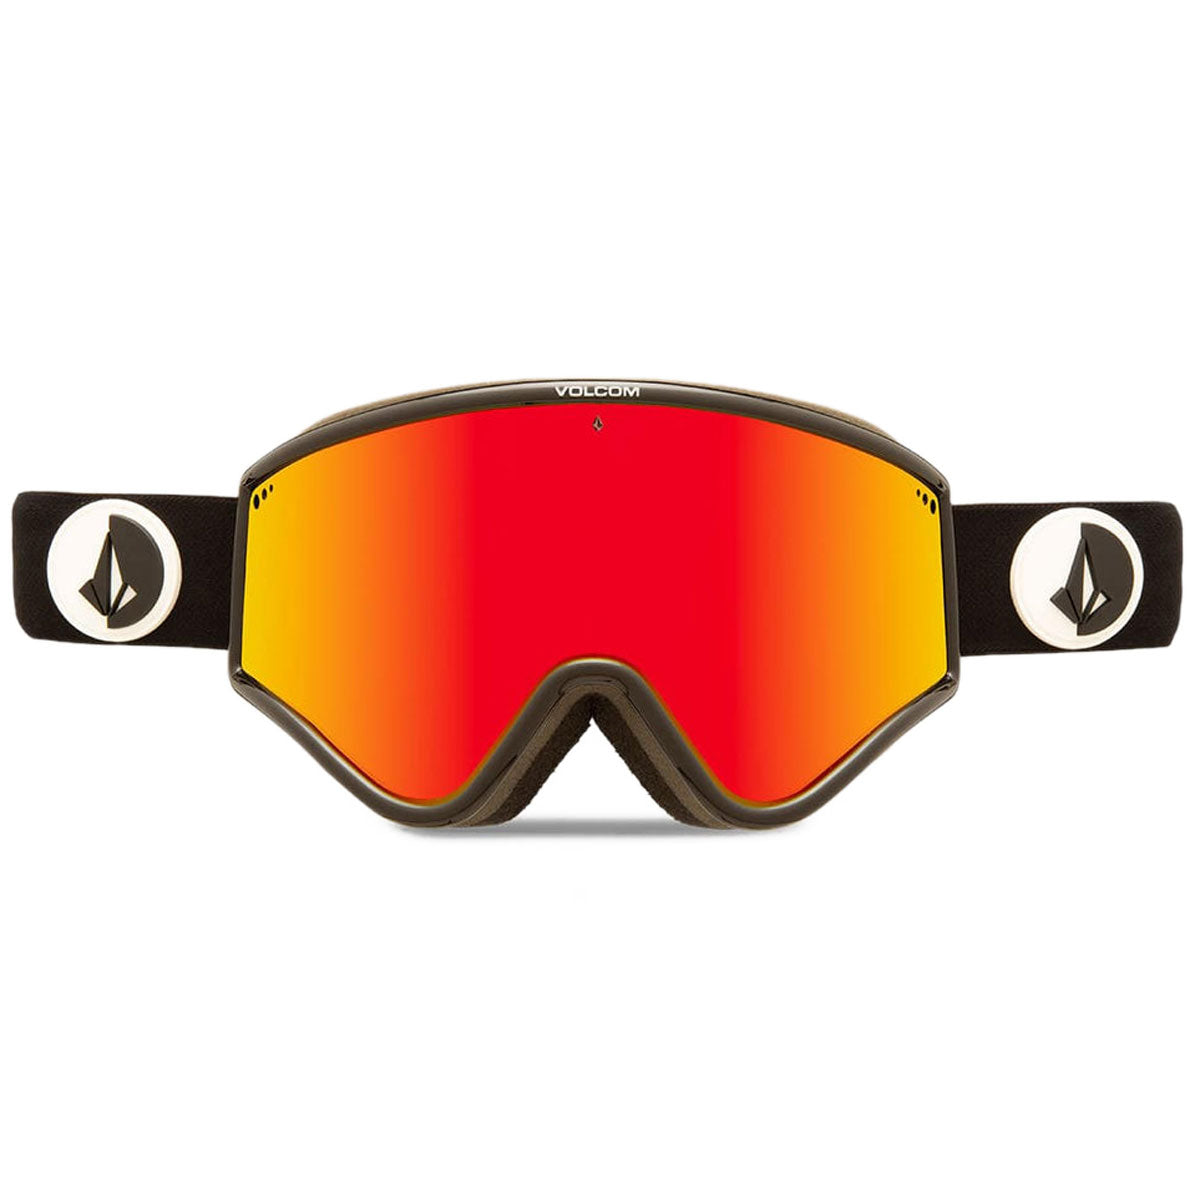 Volcom Yae Snowboard Goggles - Gloss Black/Red Chrome image 1